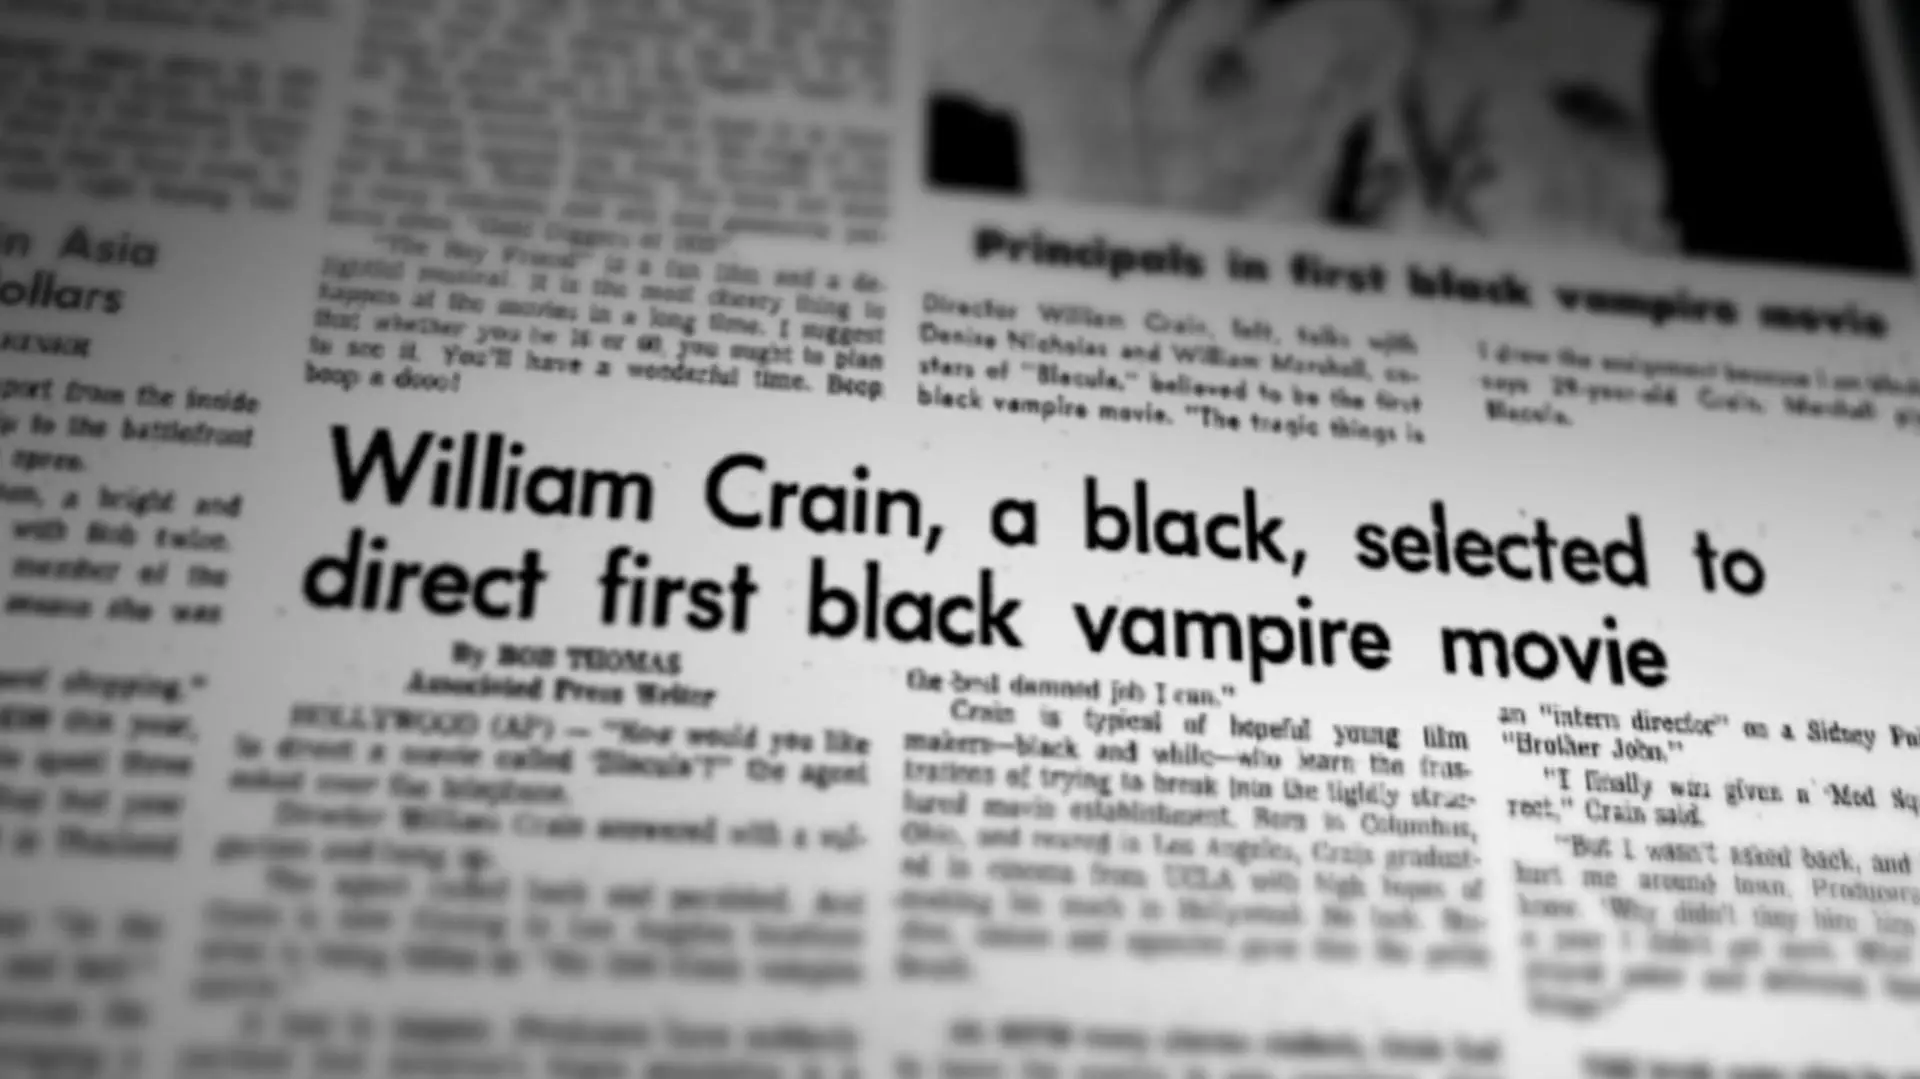 Horror Noire: A History of Black Horror_peliplat